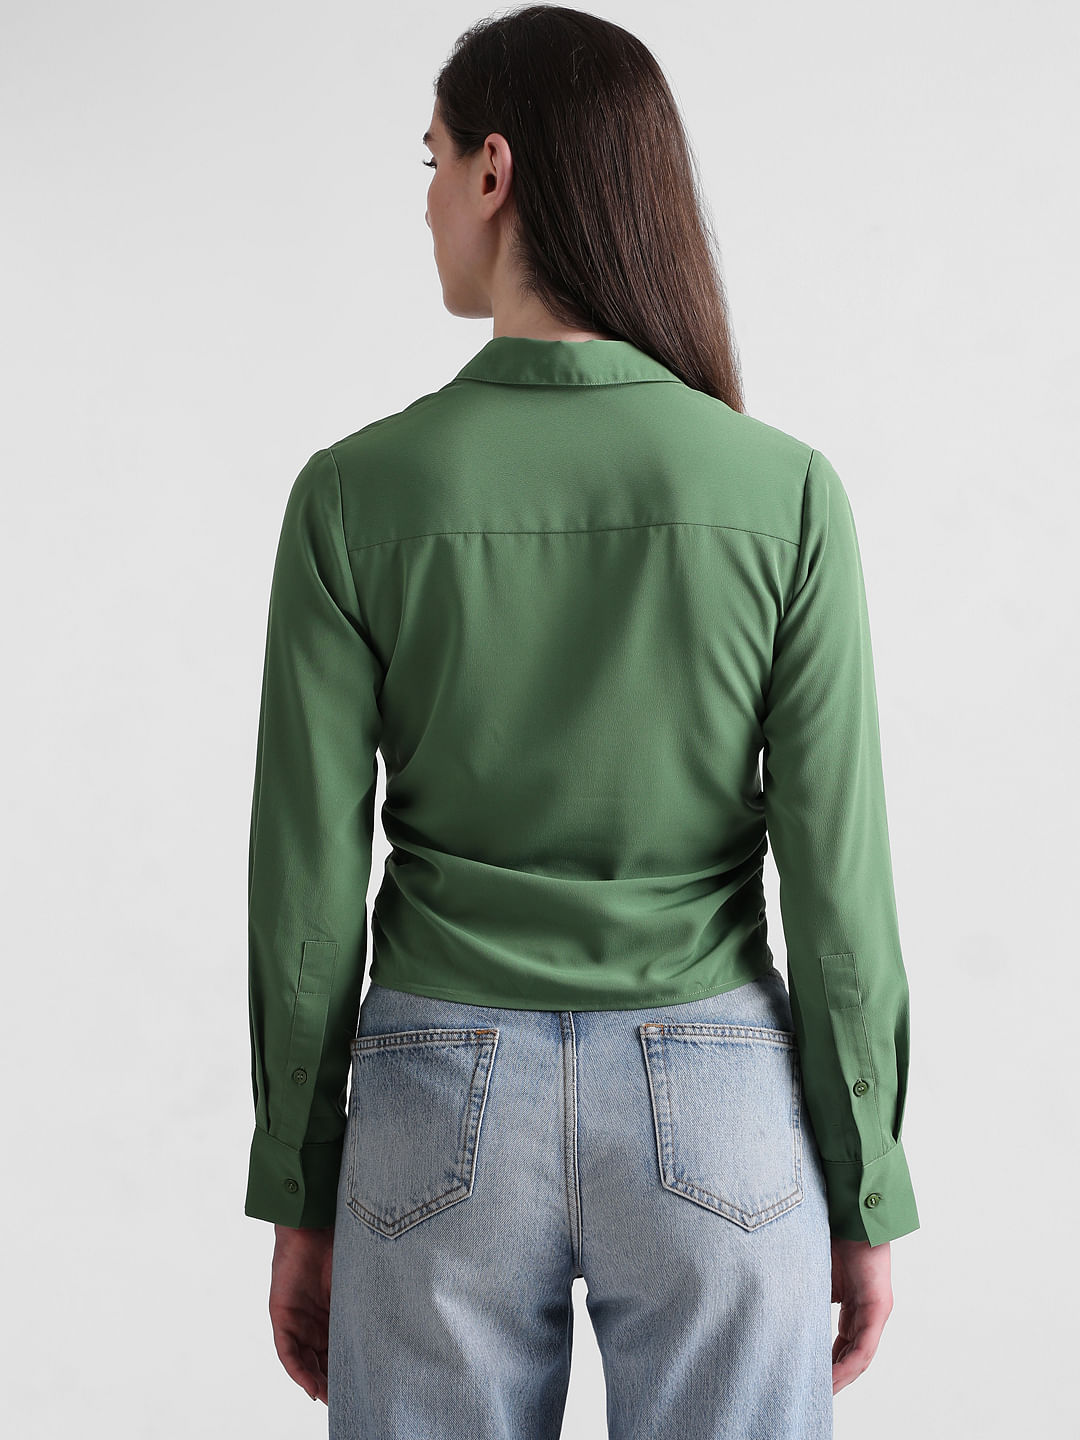 Jean Jacket With Frayed Detail Sagebrush Green APNY